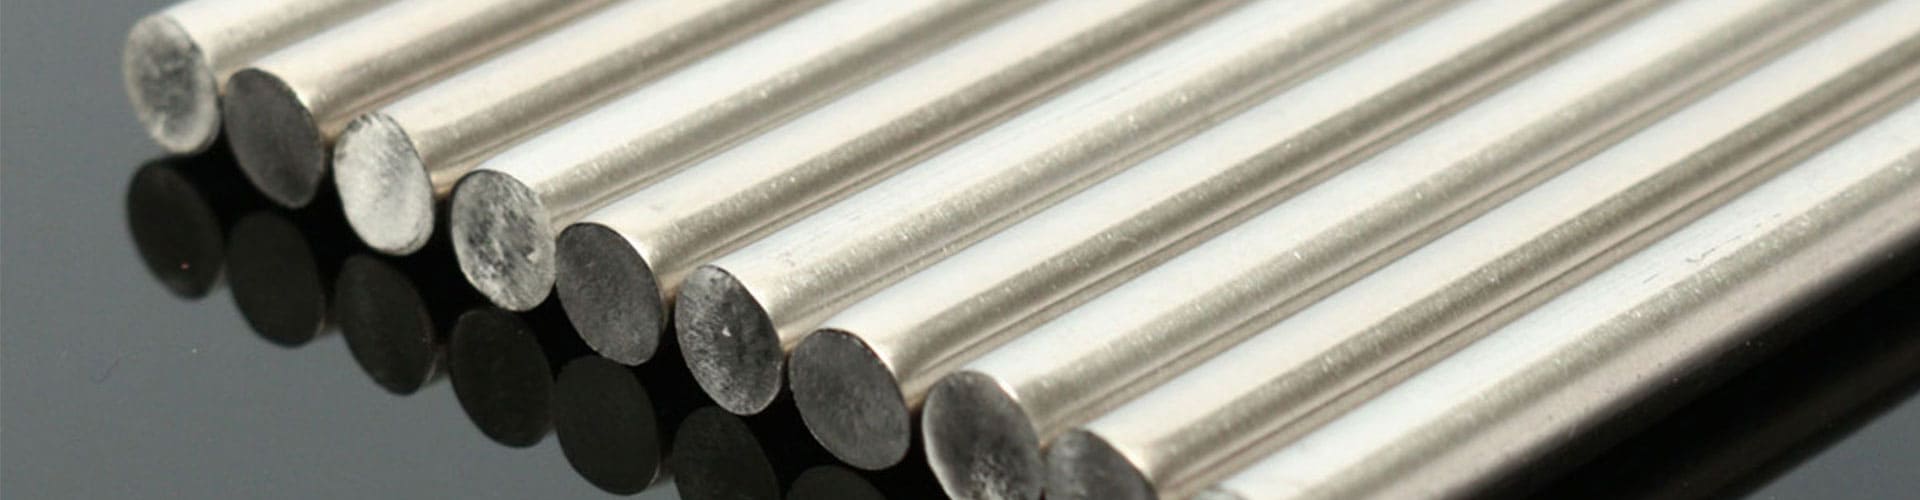 nickel-alloy-201-round-bars-rods-manufacturer-exporter-supplier-in-philippines